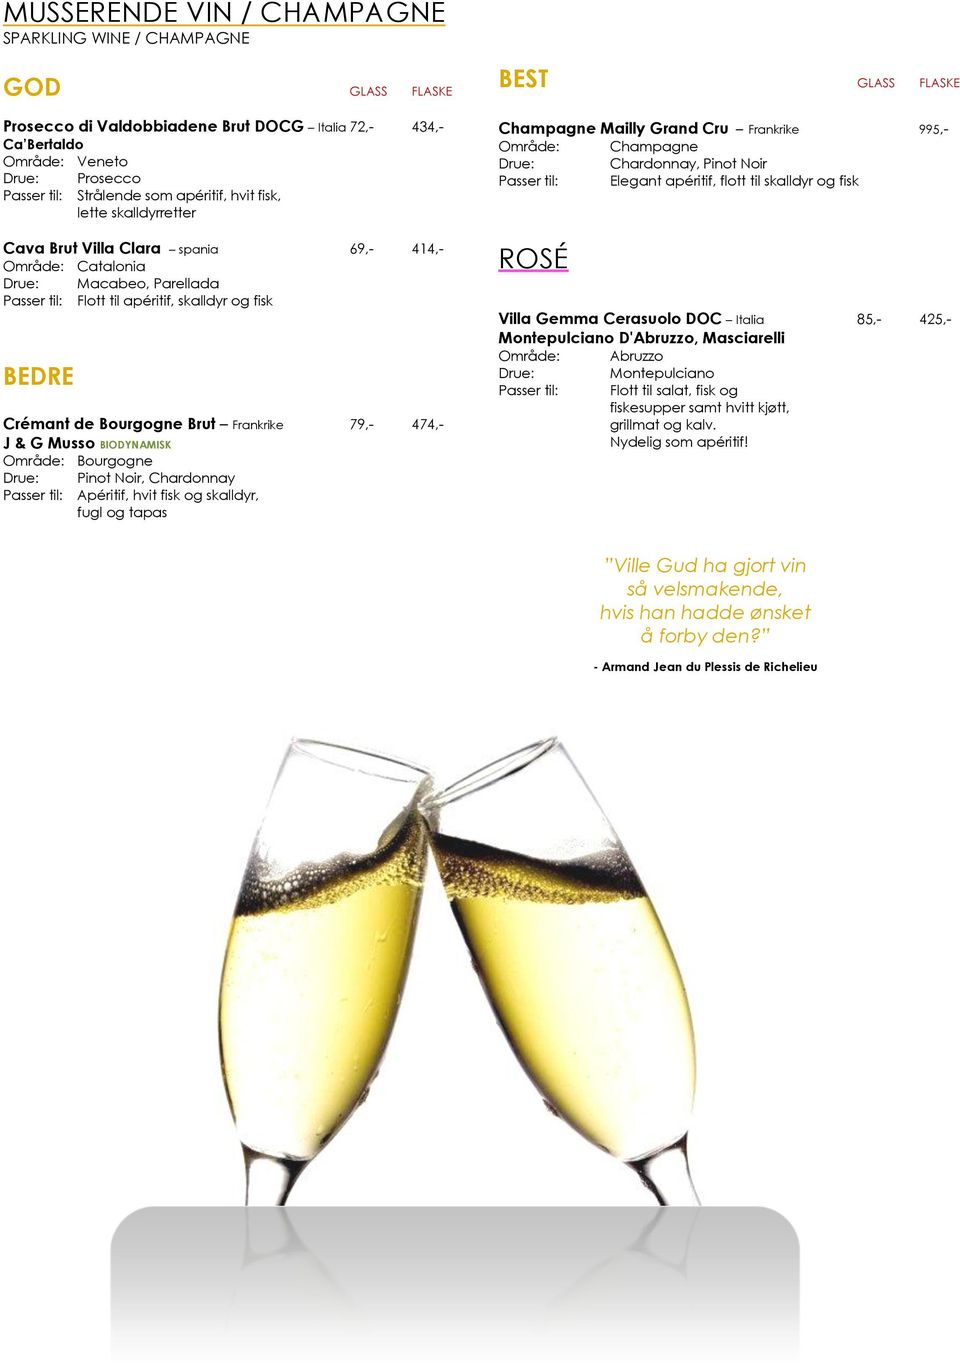 Område: Bourgogne Pinot Noir, Chardonnay Apéritif, hvit fisk og skalldyr, fugl og tapas GLASS FLASKE Champagne Mailly Grand Cru Frankrike 995,- Område: Champagne Chardonnay, Pinot Noir Elegant